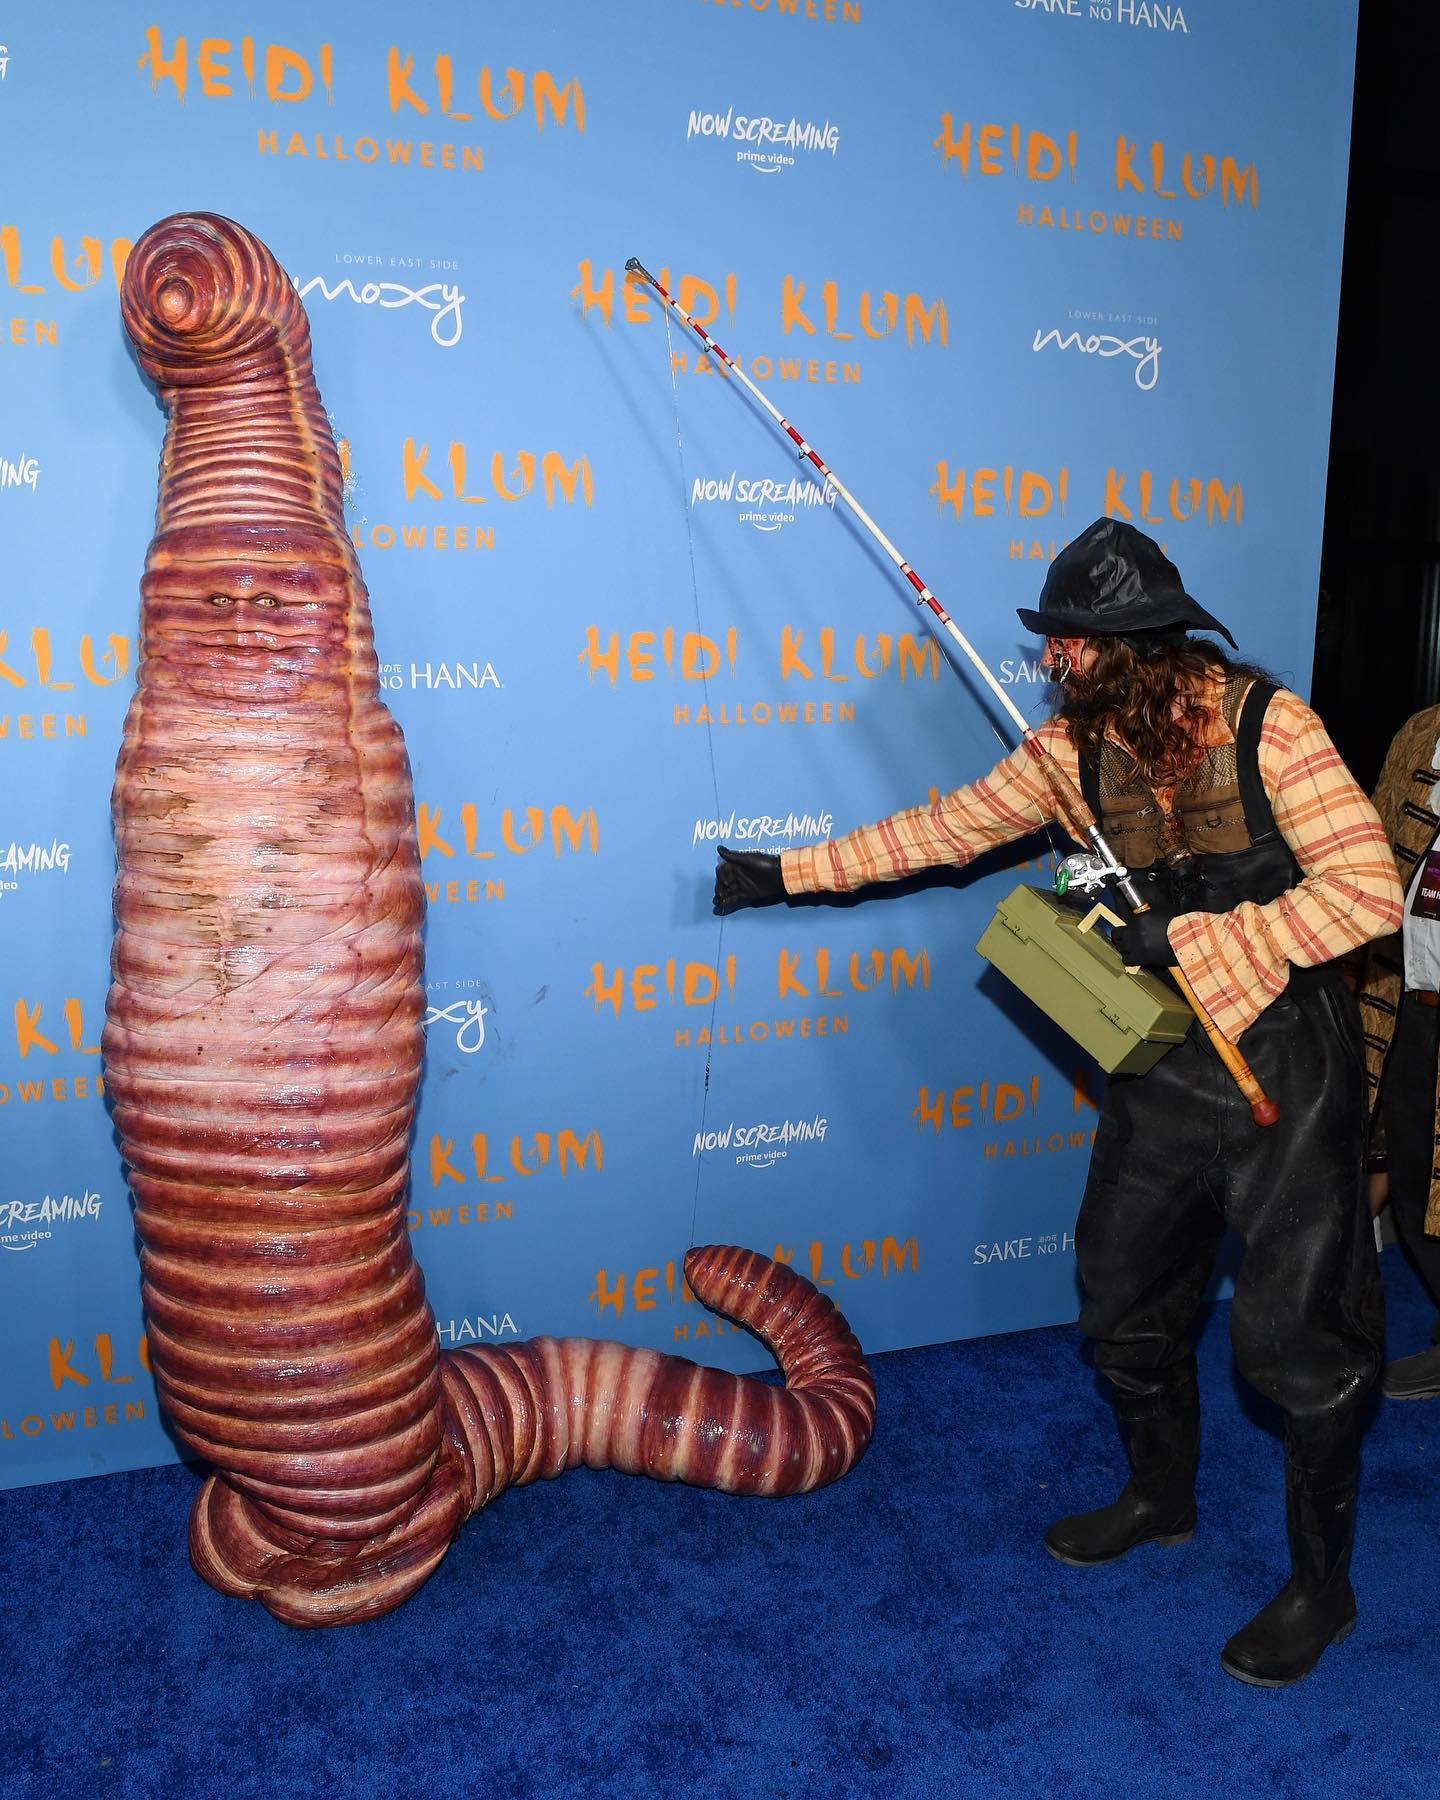 Heidi Klum and Tom Kaulitz pose as a worm and a fisherman for Halloween